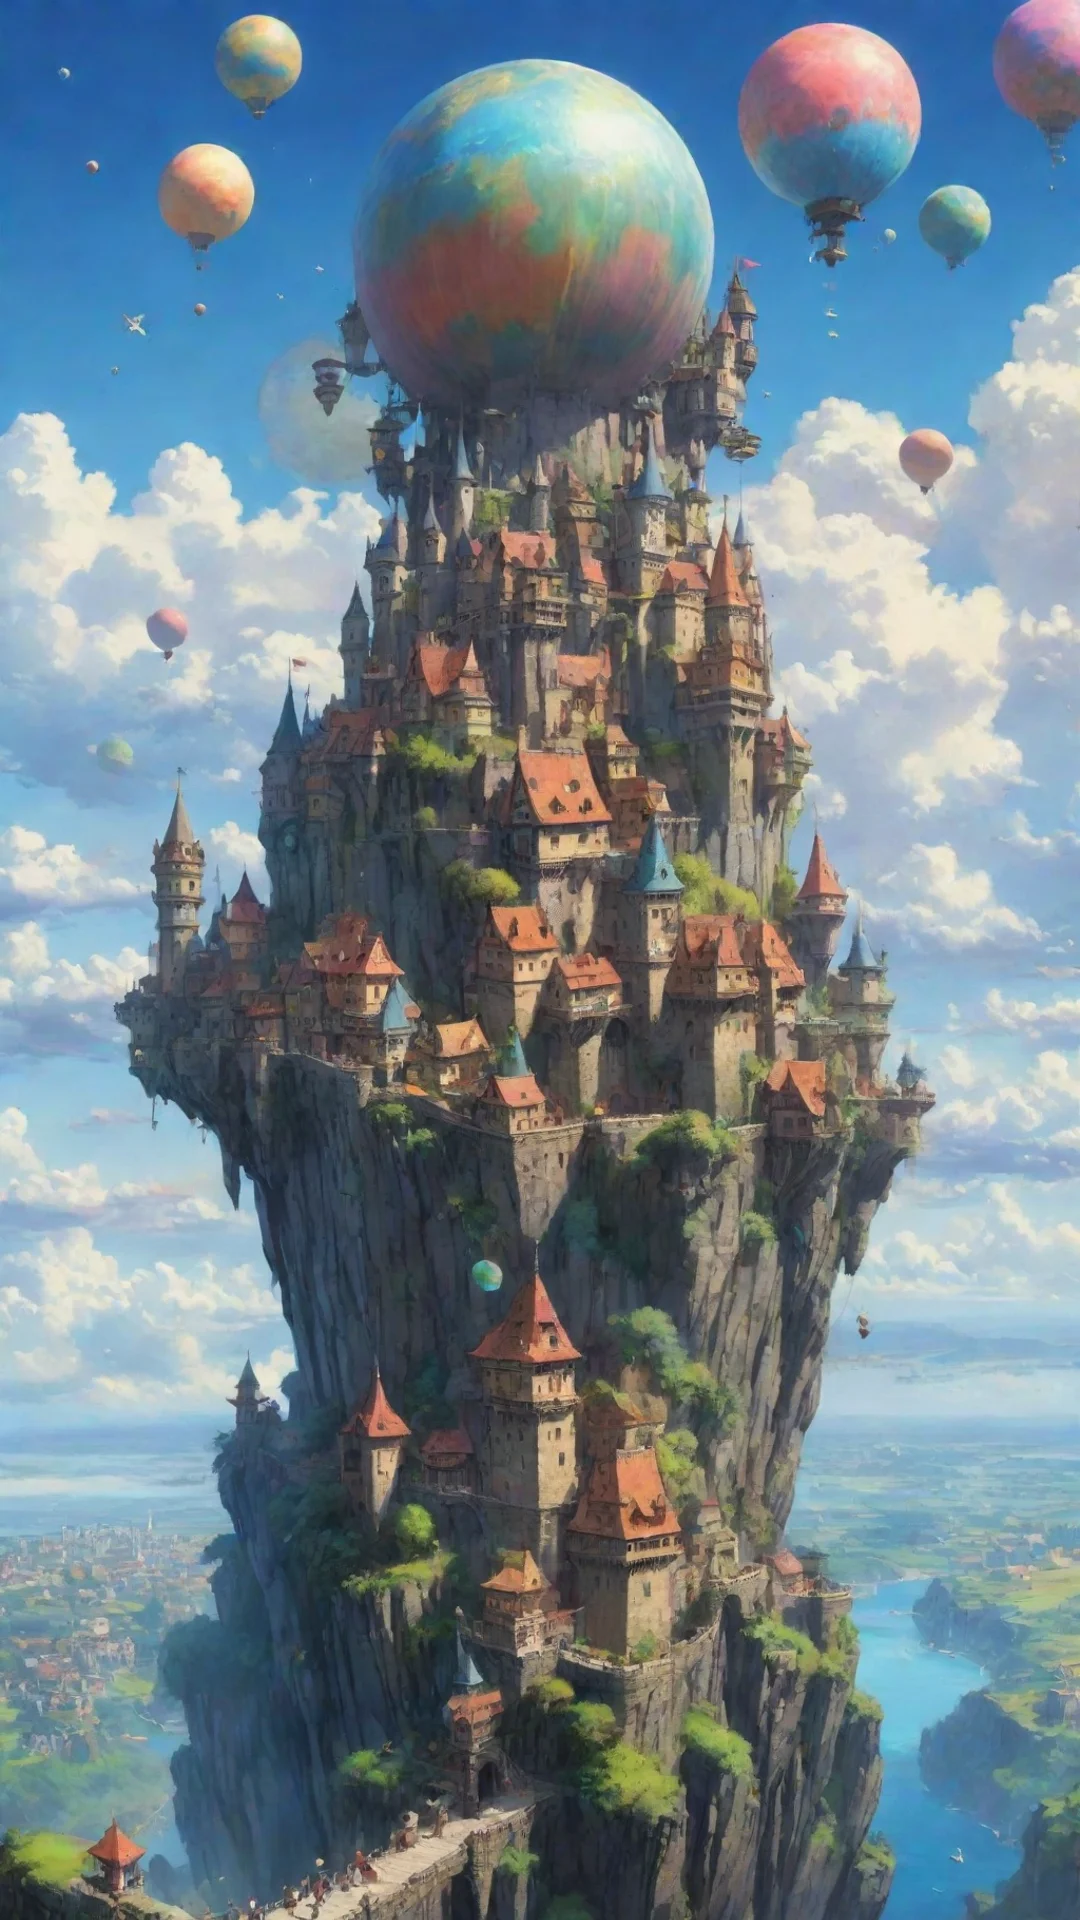 aifantasy art ghibli miyazaki hd best quality aesthetic flying castle colorful planets city fortress  tall